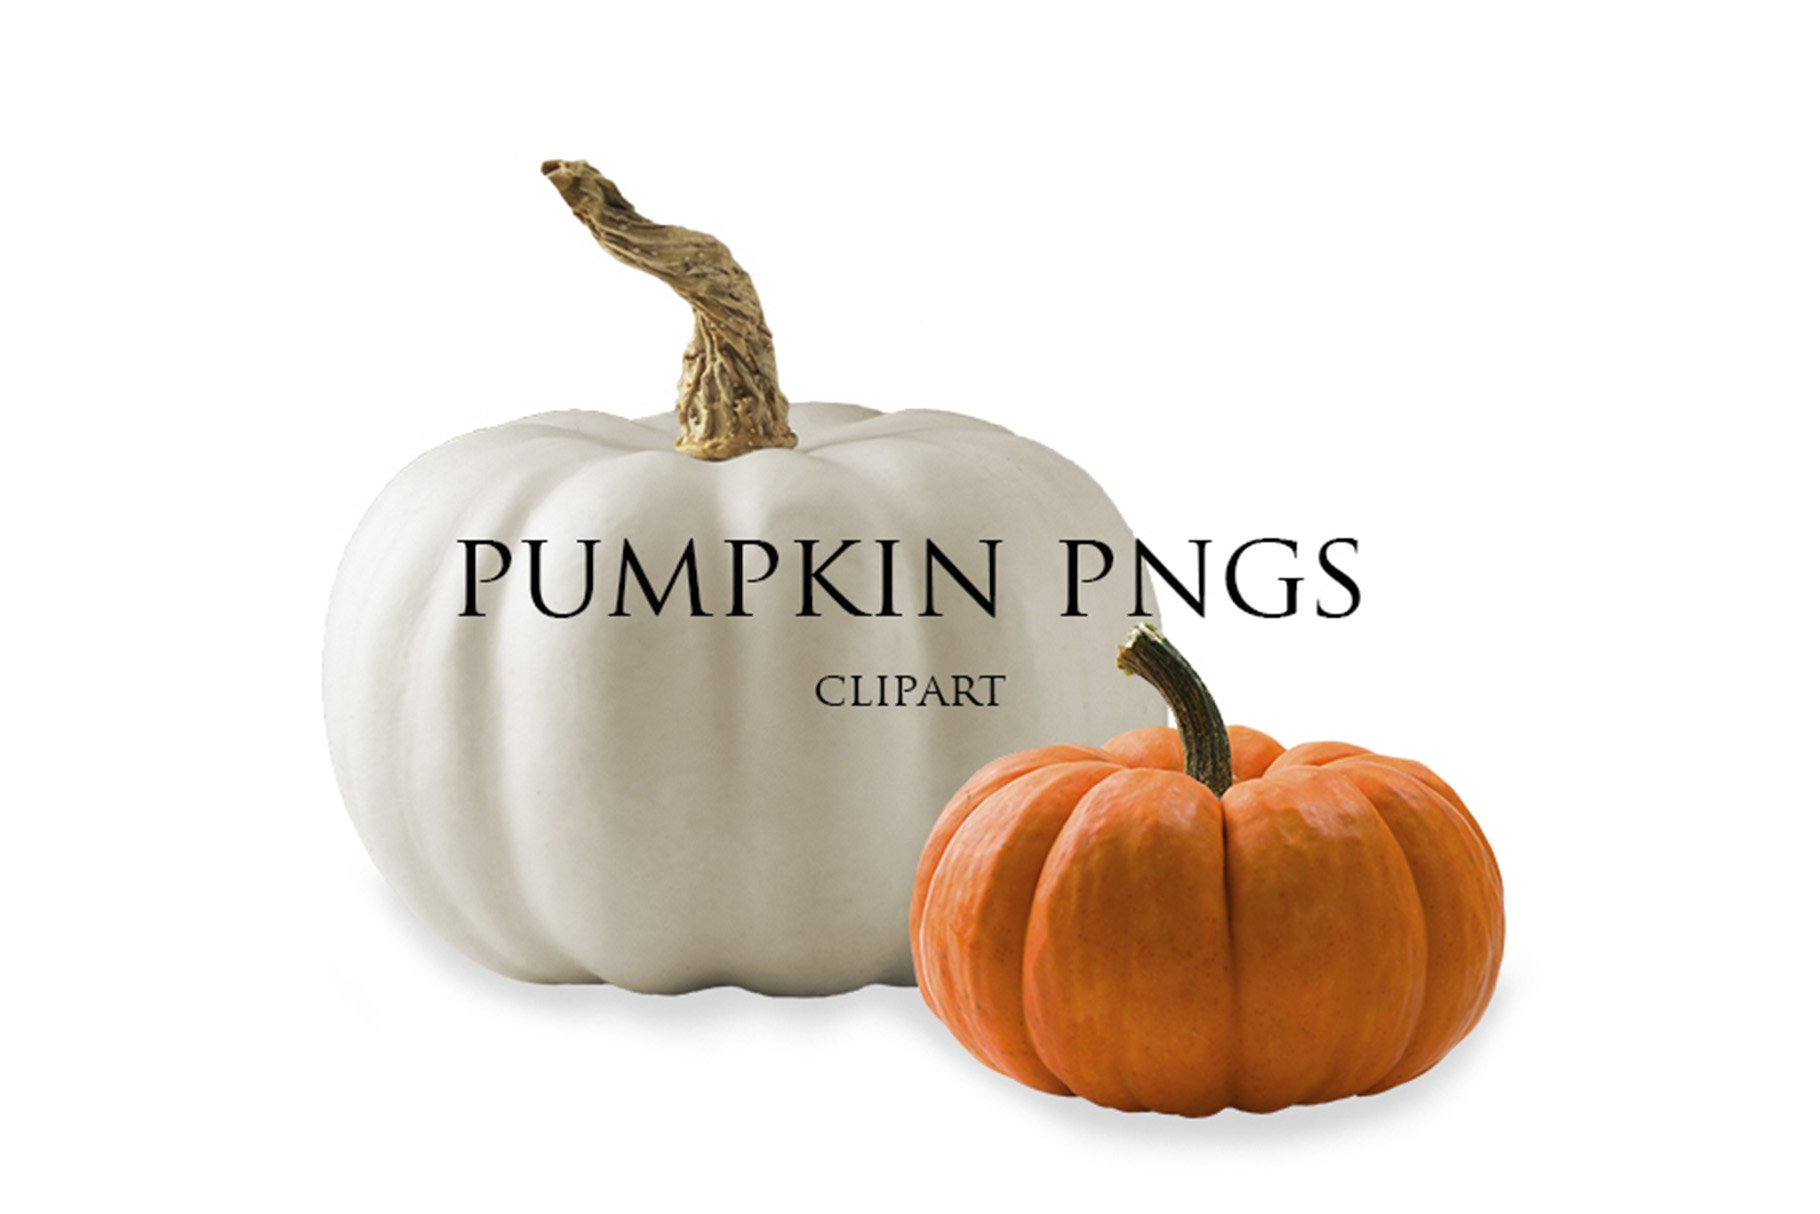 Pumpkin PNGs Clip Artcover image.